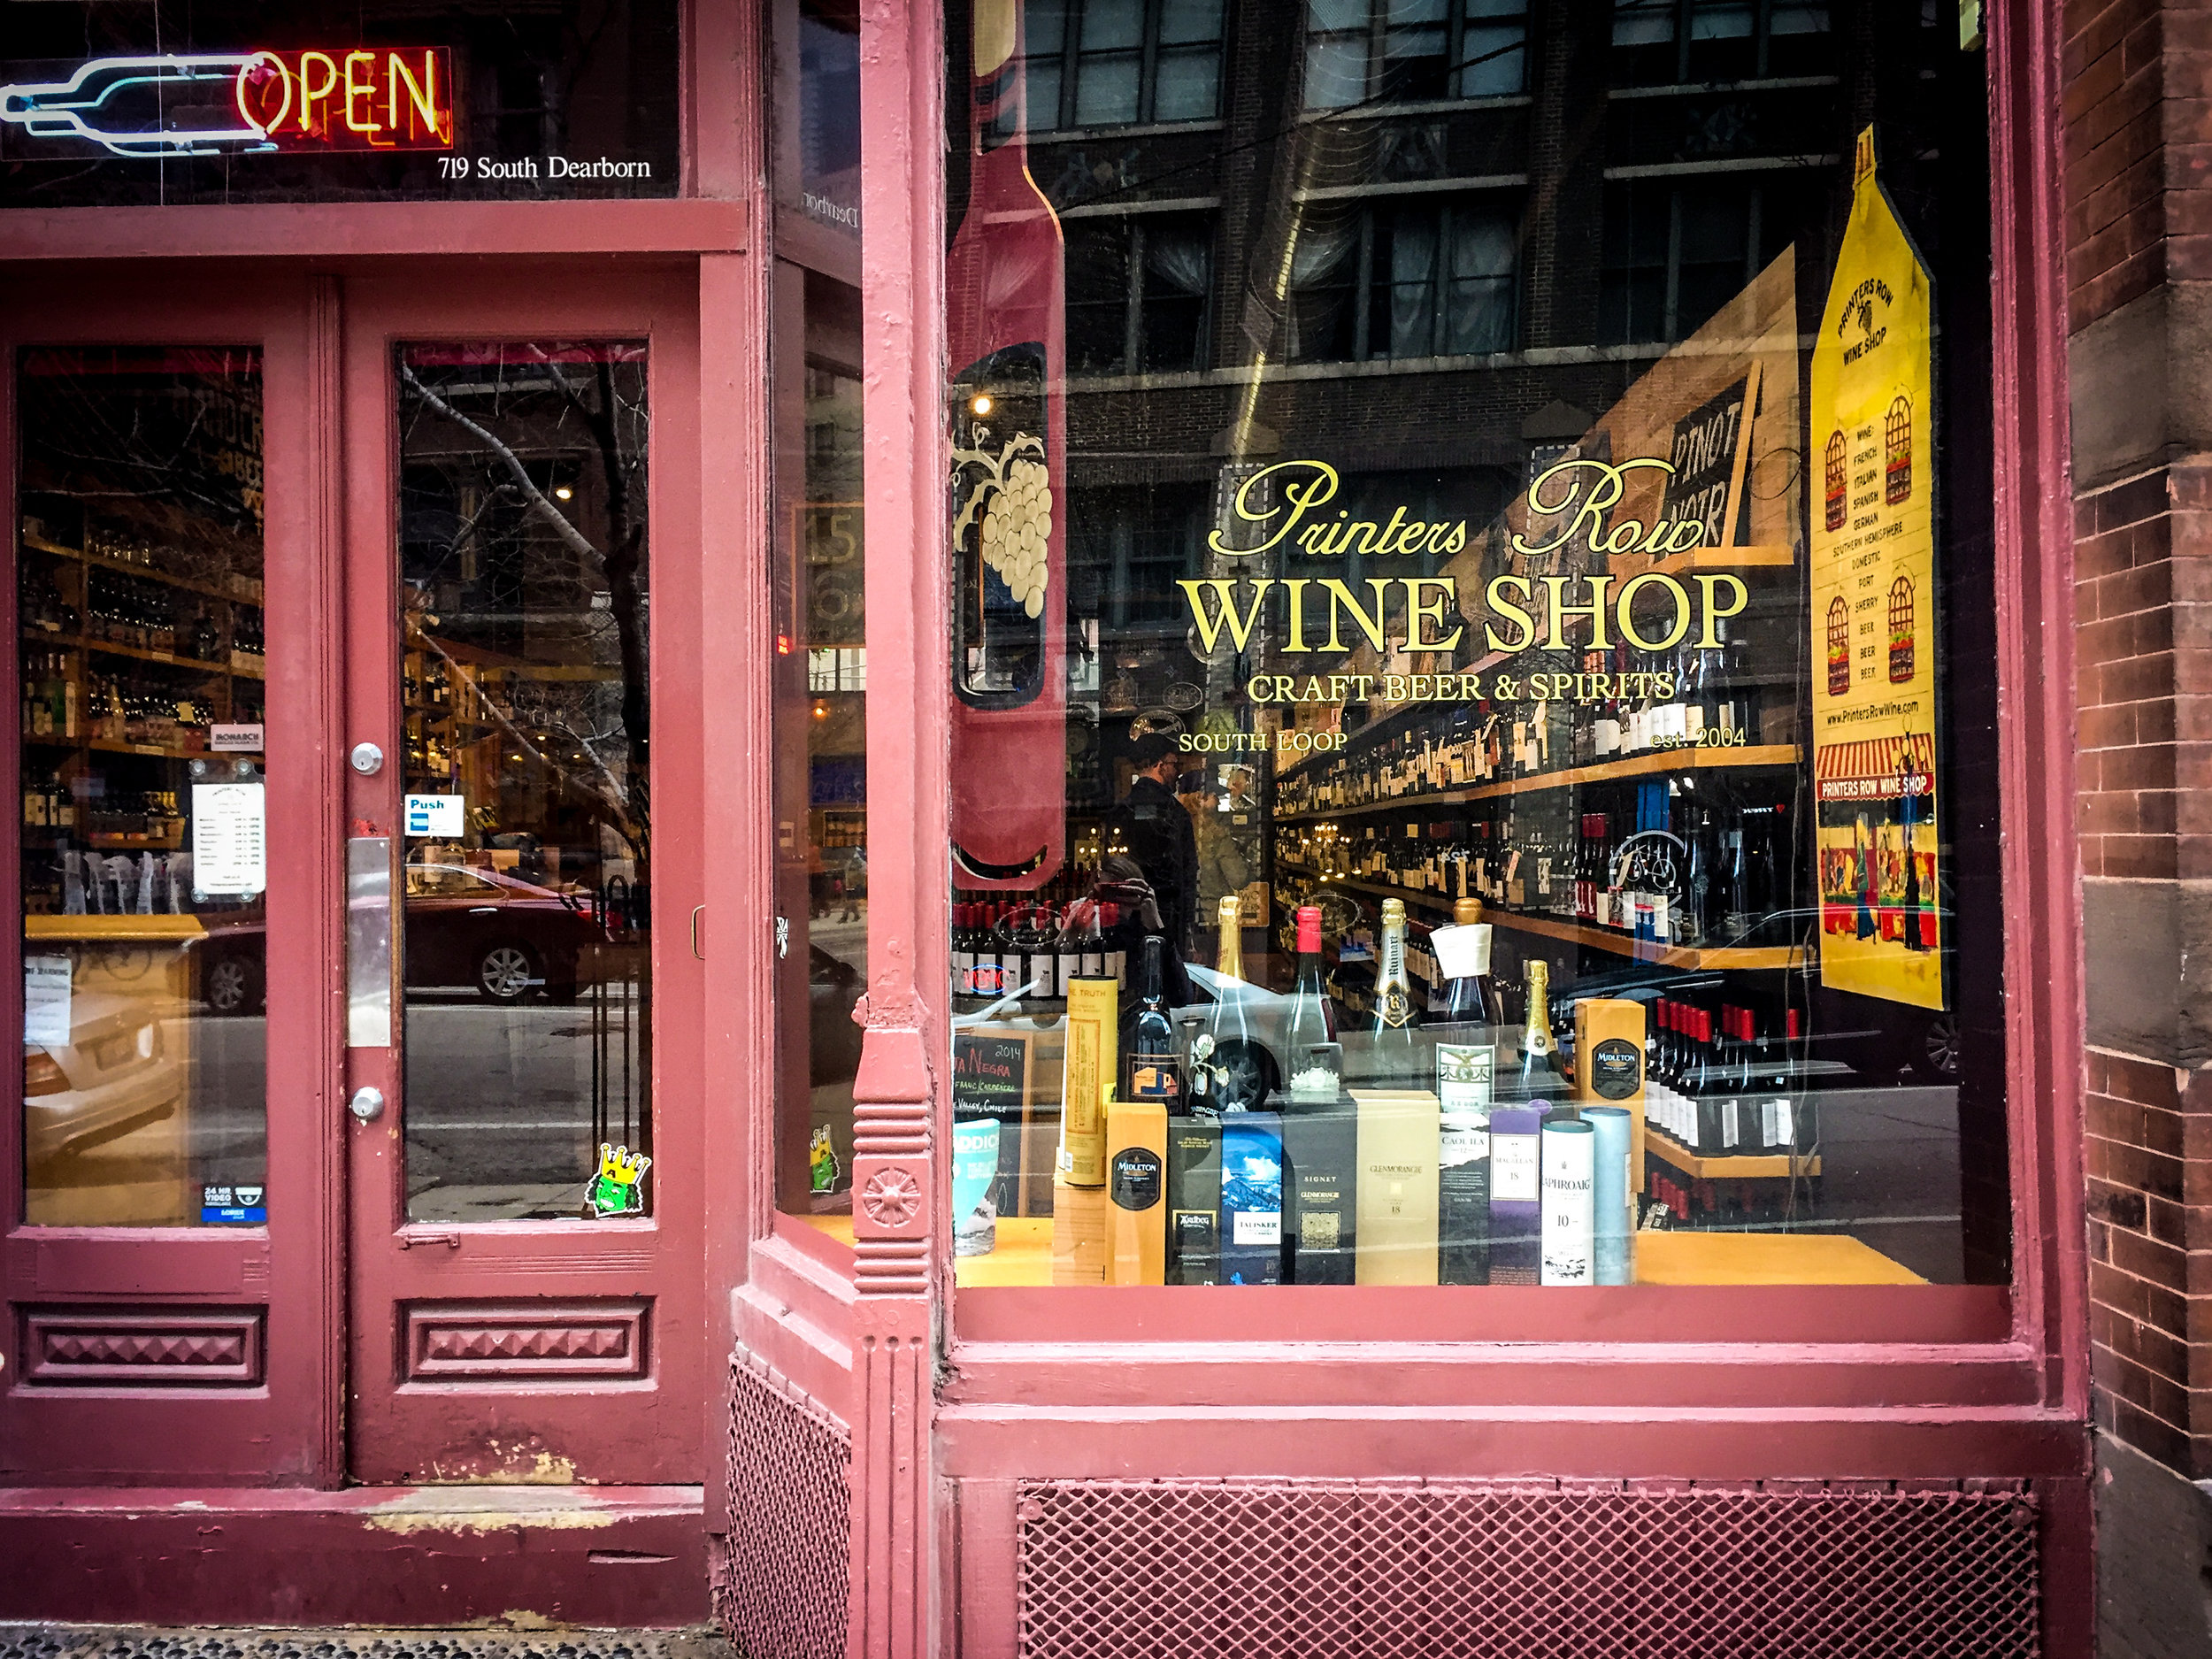 Printers Row Wine Shop